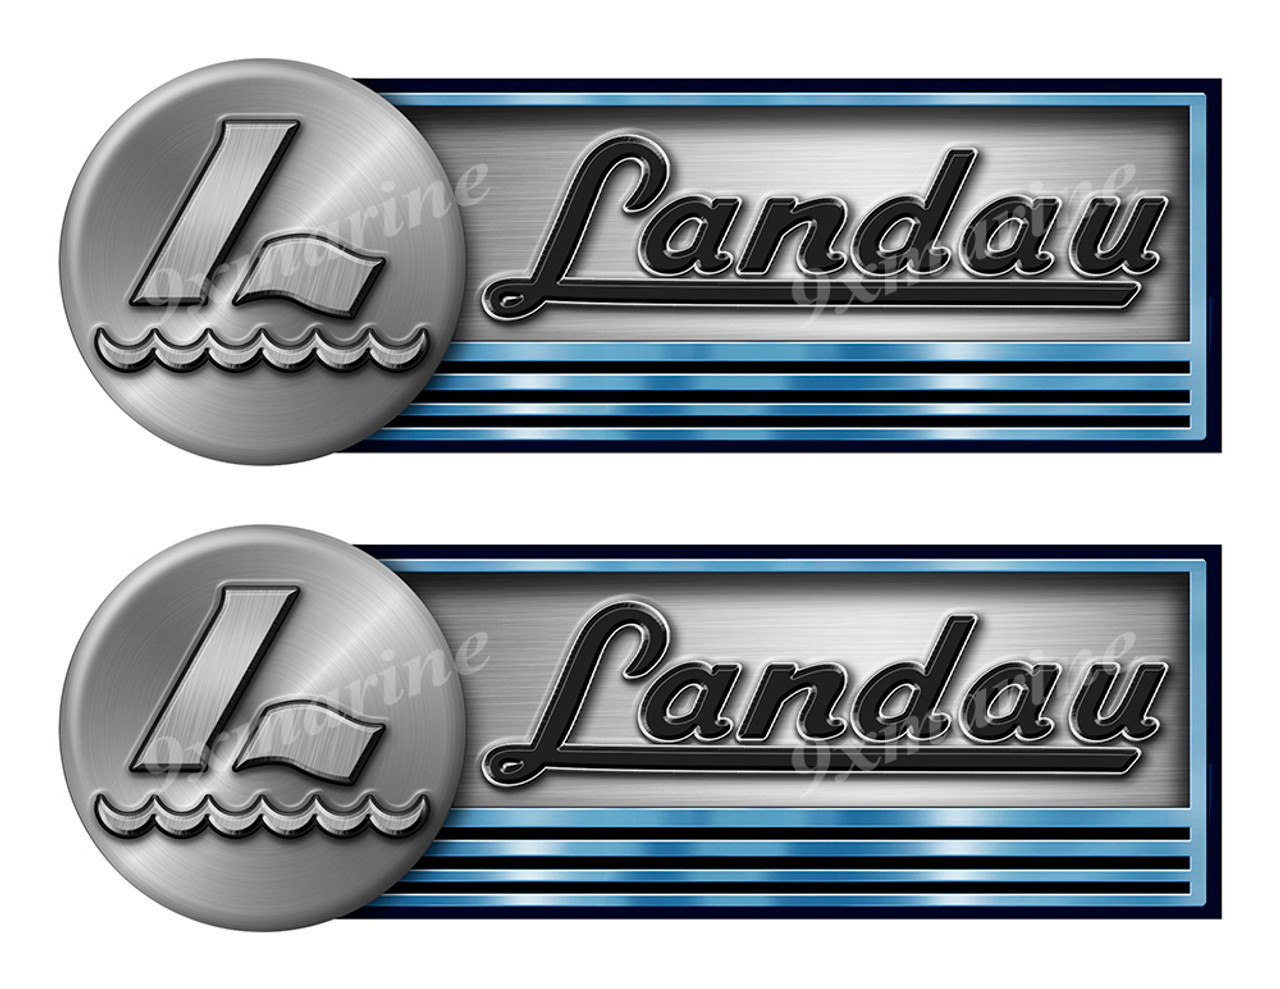 Two Landau Stickers for Boat Restoration - 10" long each